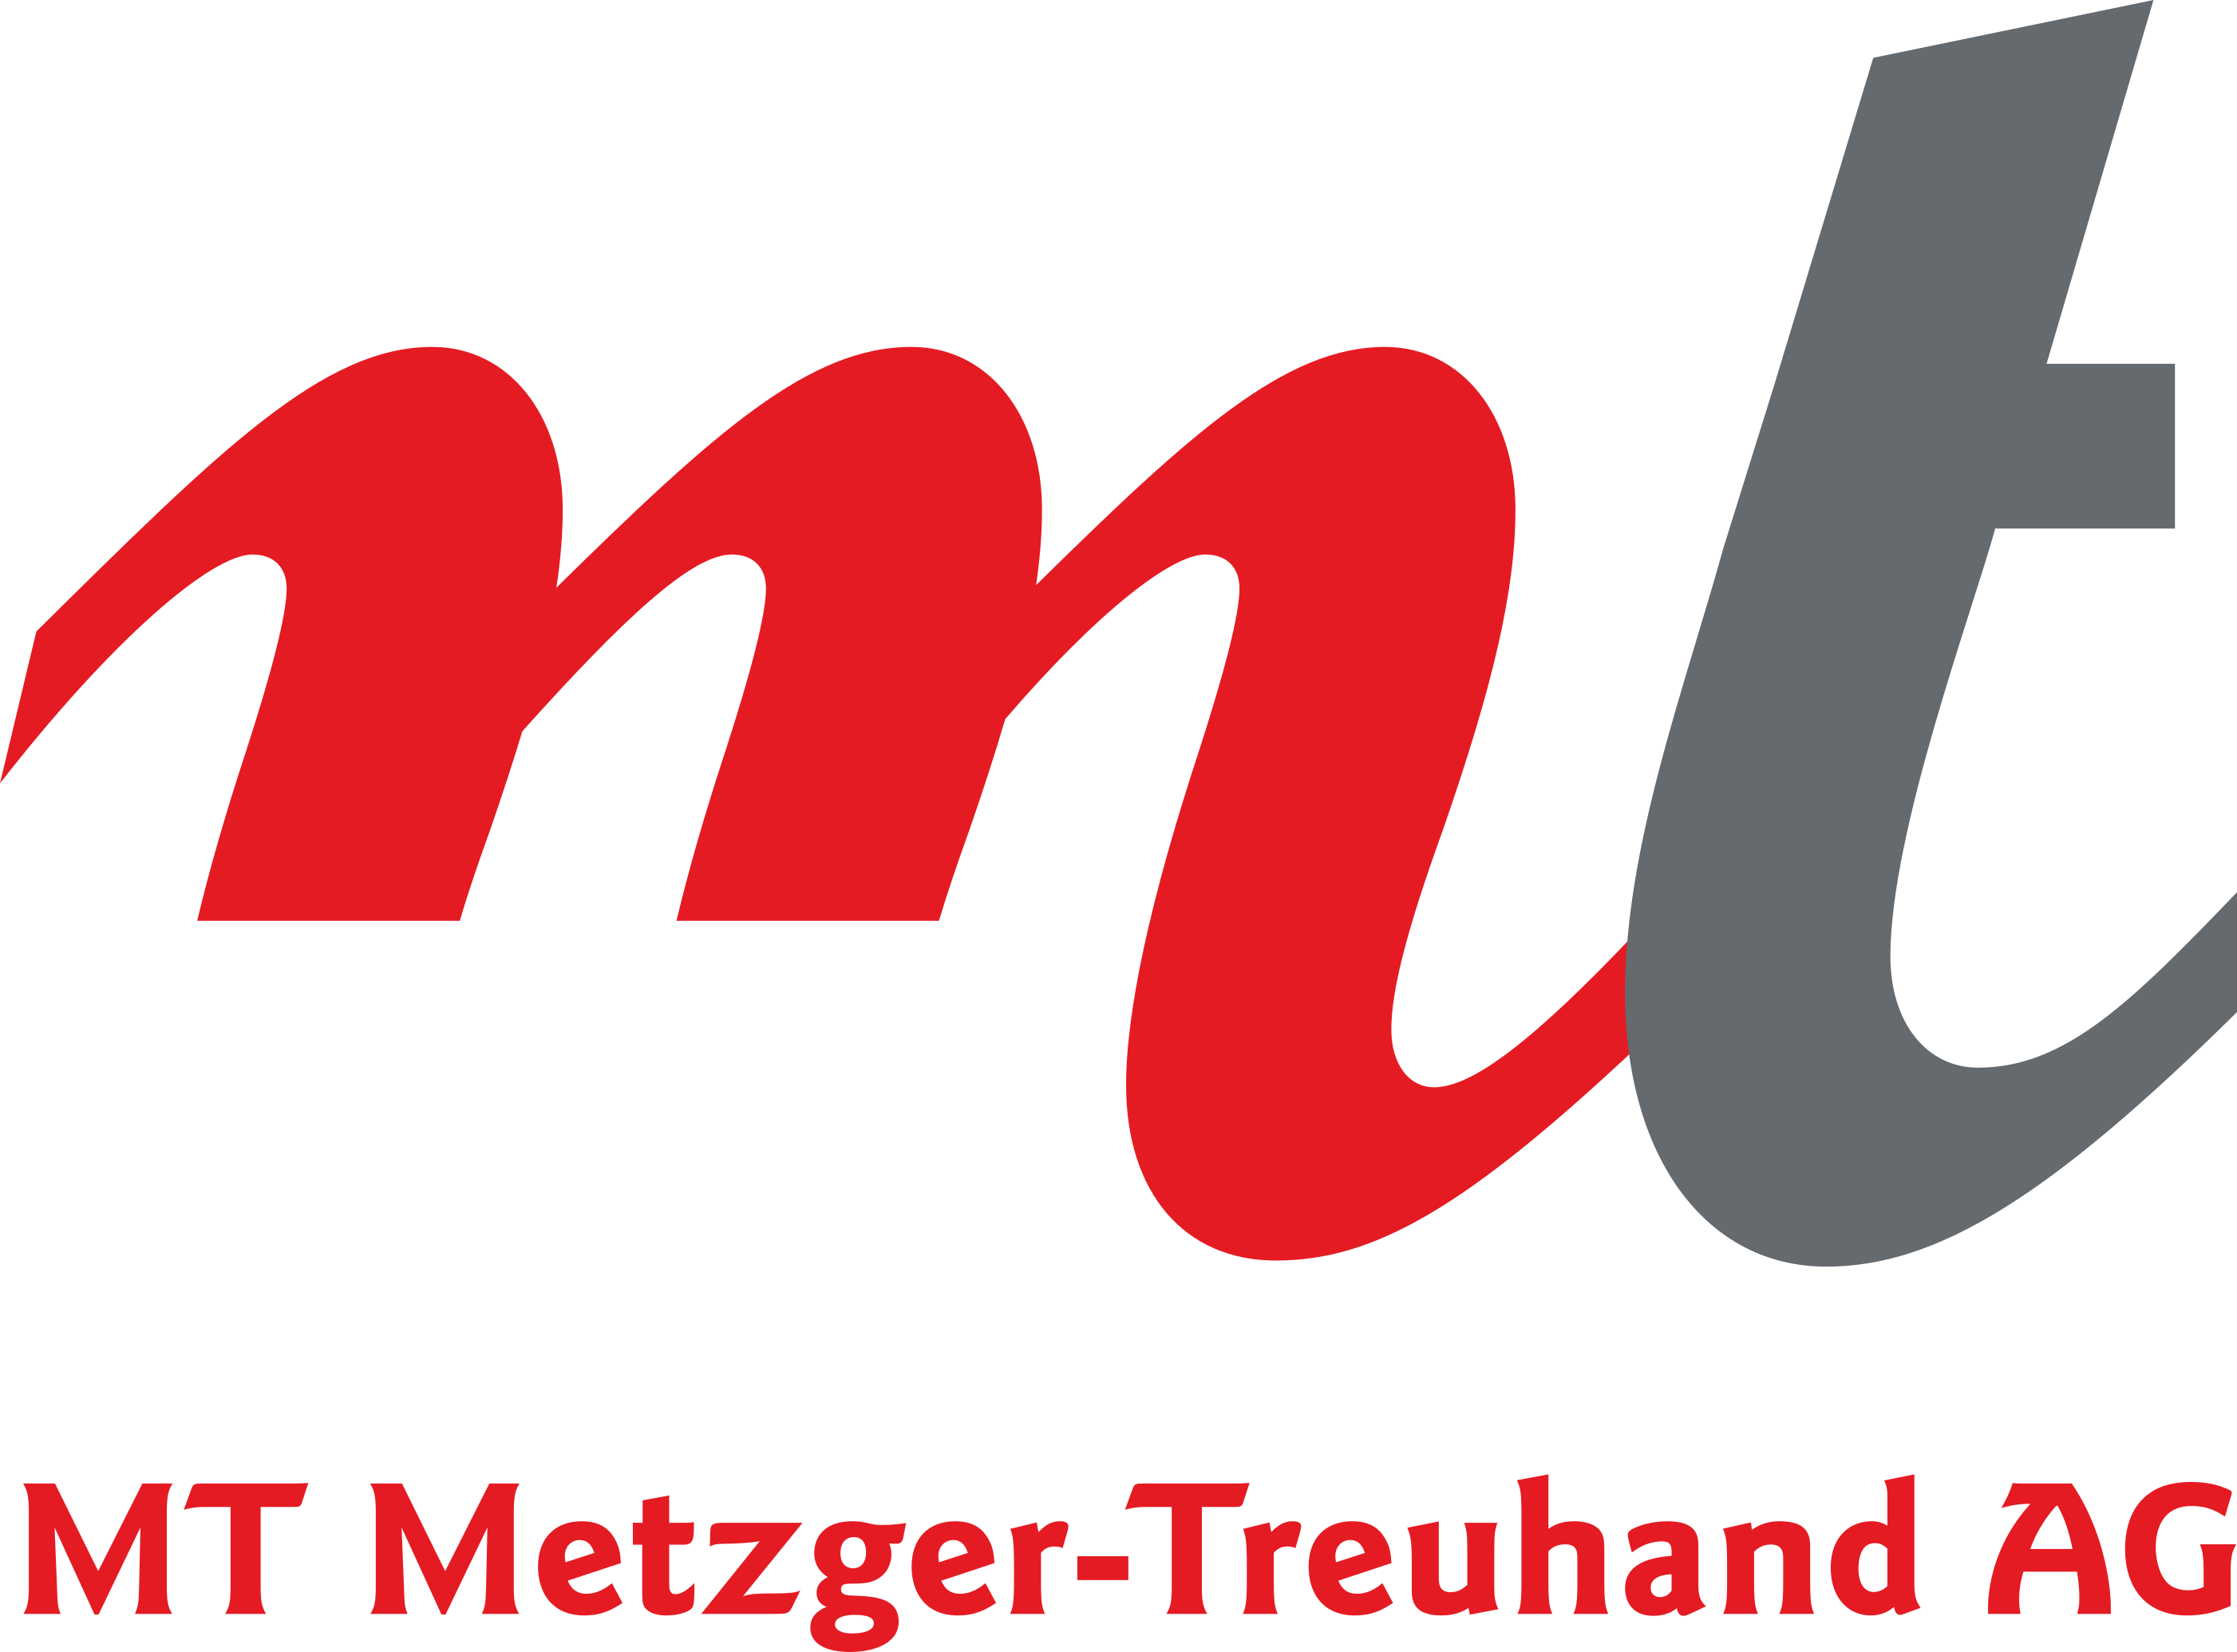 MT Metzger-Treuhand AG